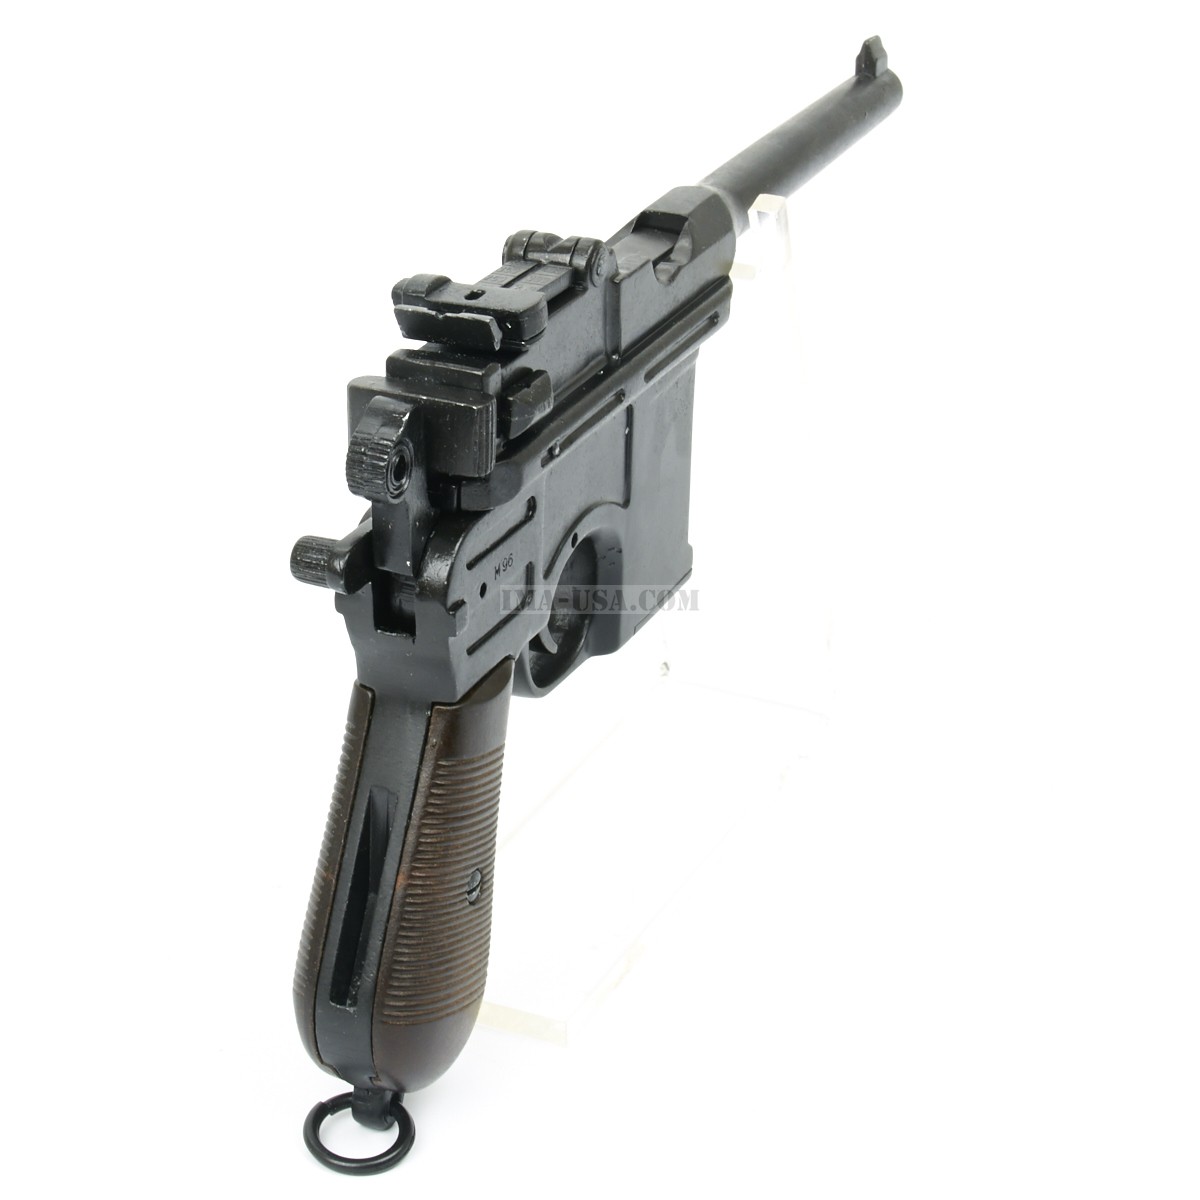 Mauser C96 Pistol #25